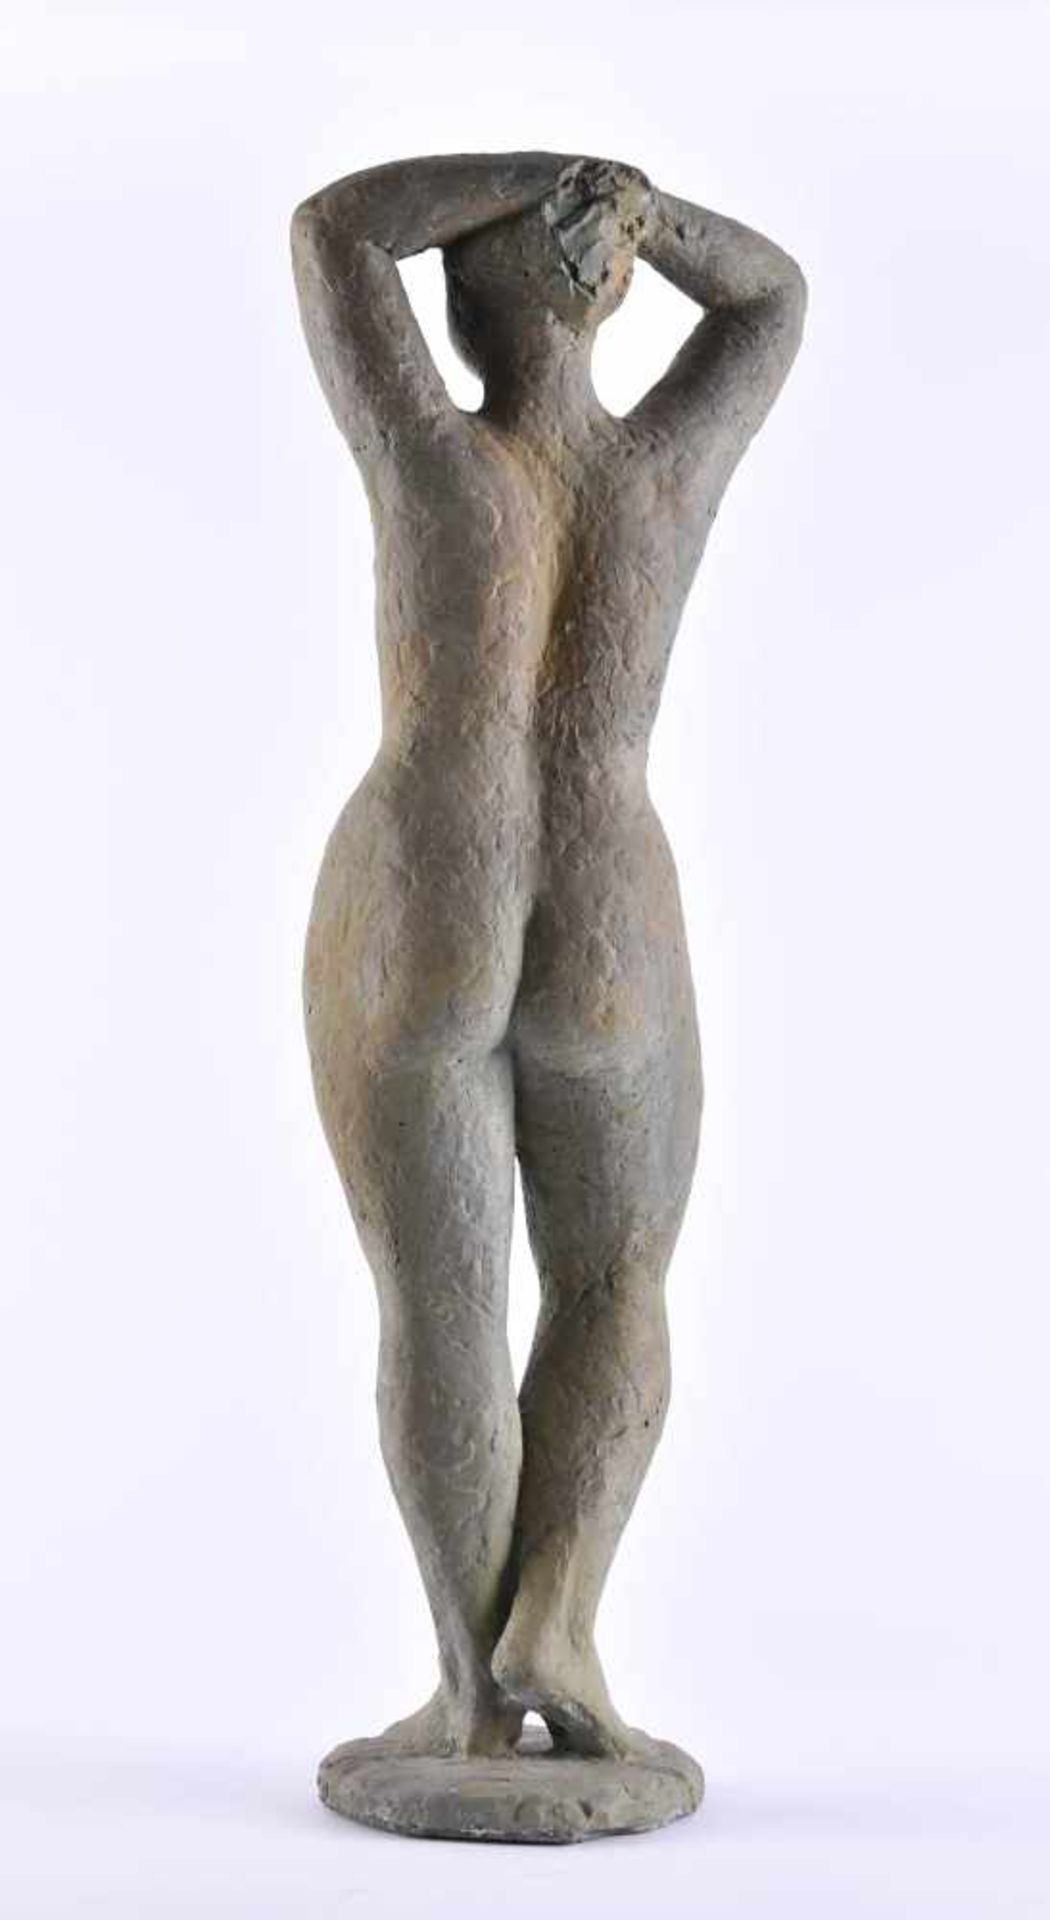 Rolf WINKLER (1930-2001)"Stehende"sculpture - stone casting, height: 60 cm,monogrammed on the - Bild 4 aus 5